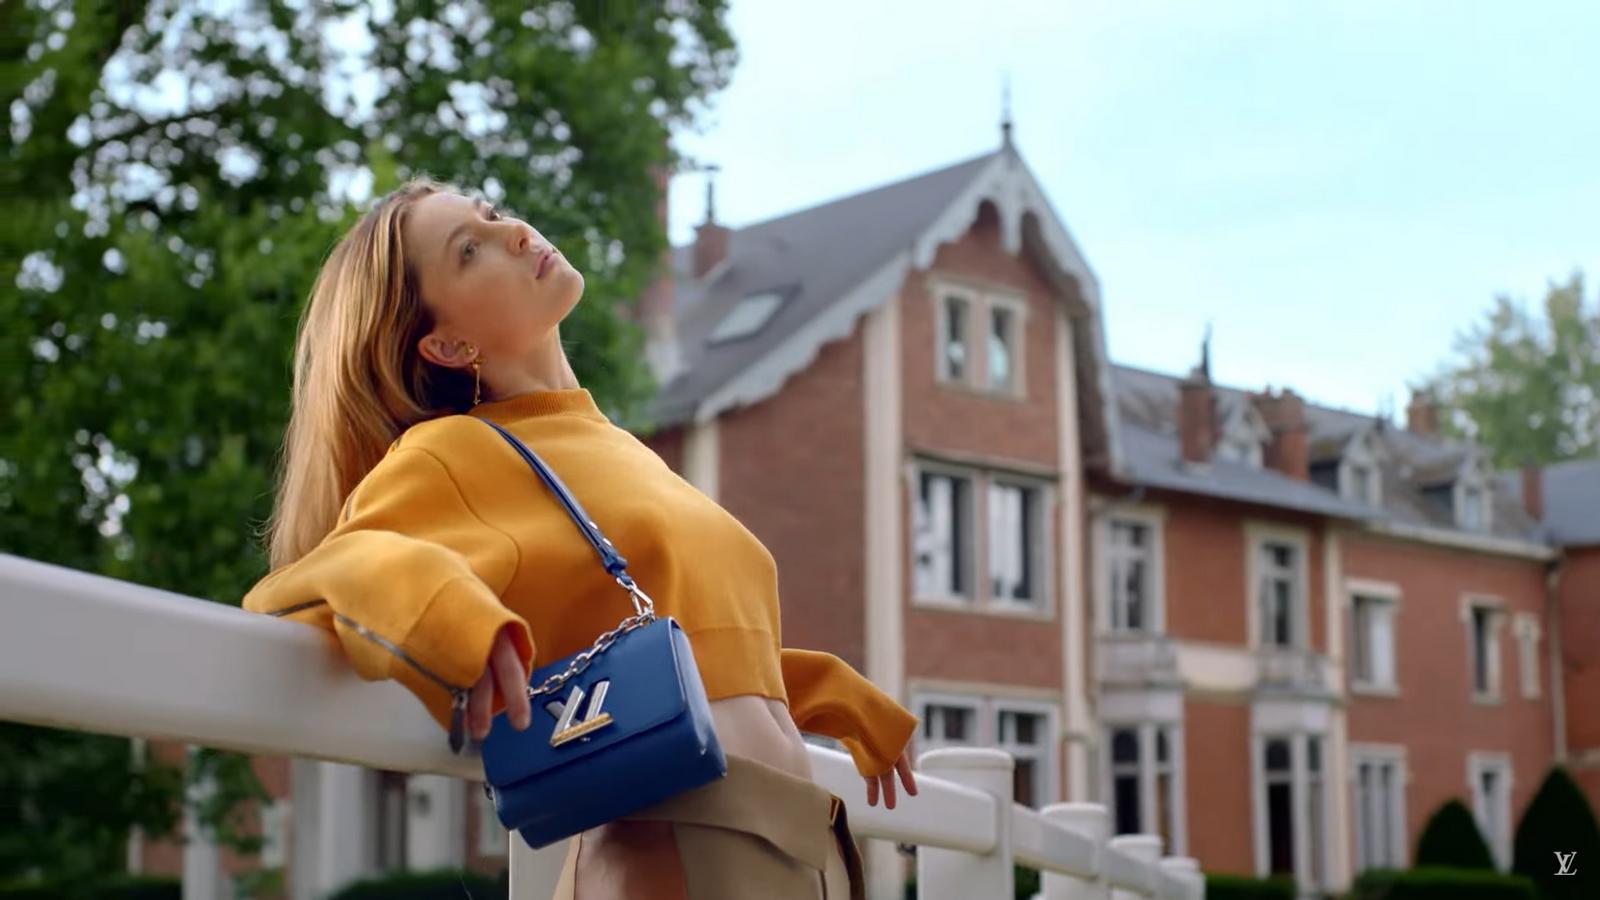 Louis Vuitton Is Spinning A Modern Twist On An Iconic Handbag